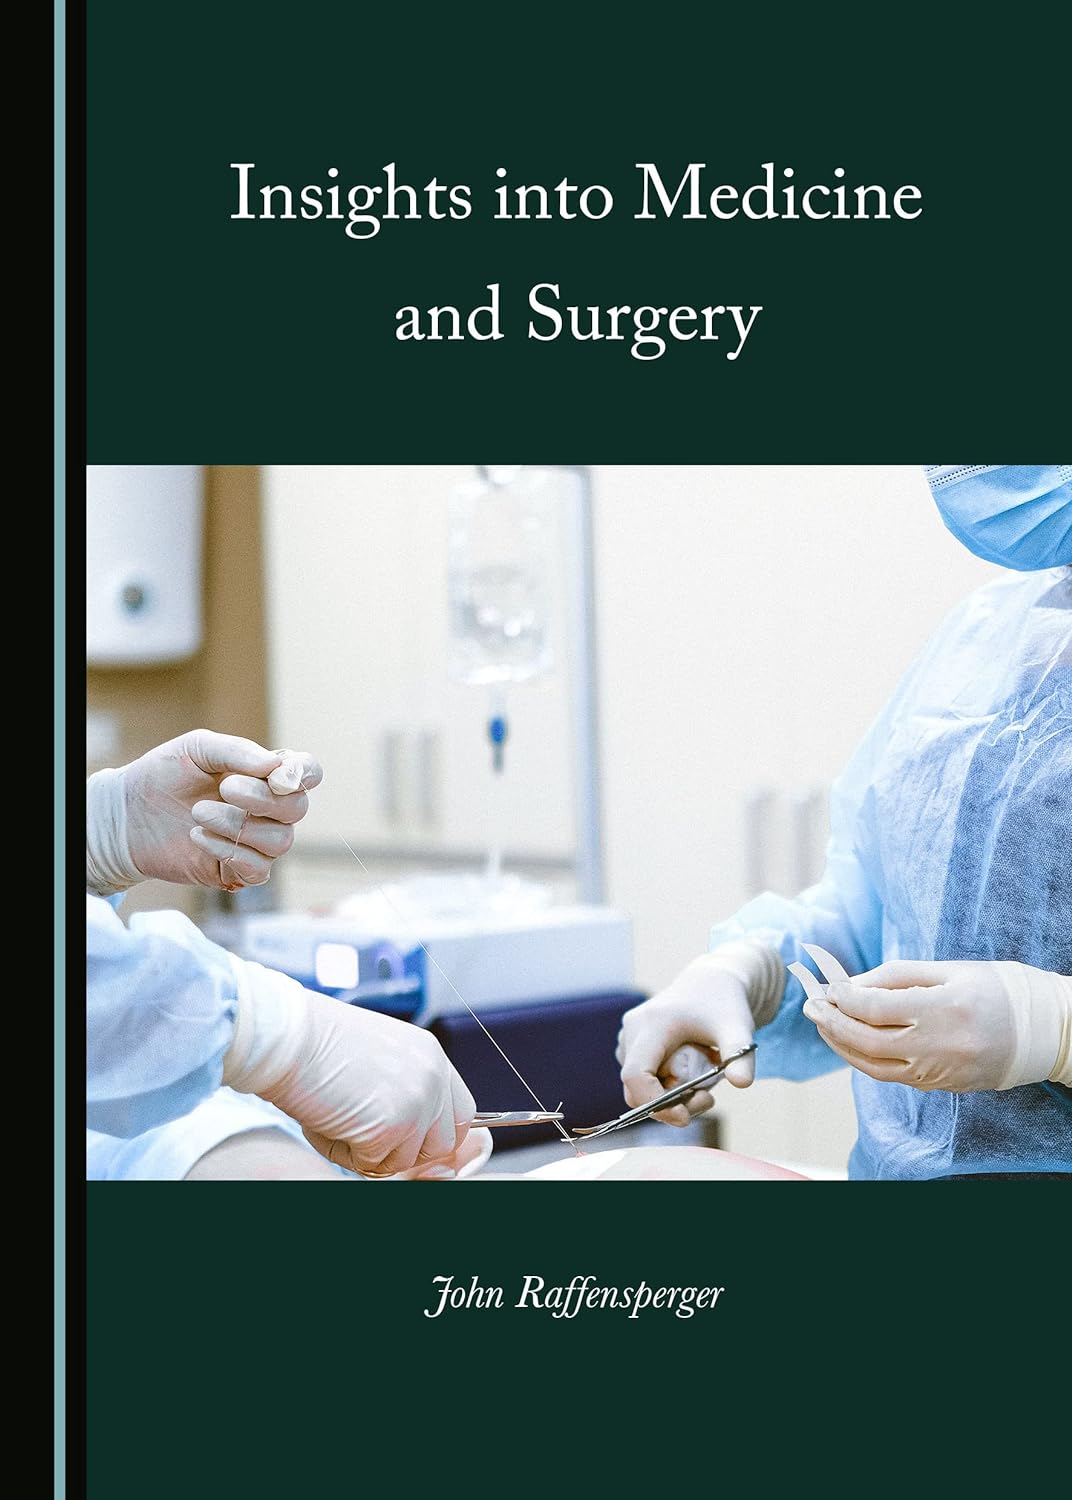 Insights into Medicine and Surgery by John Raffensperger 